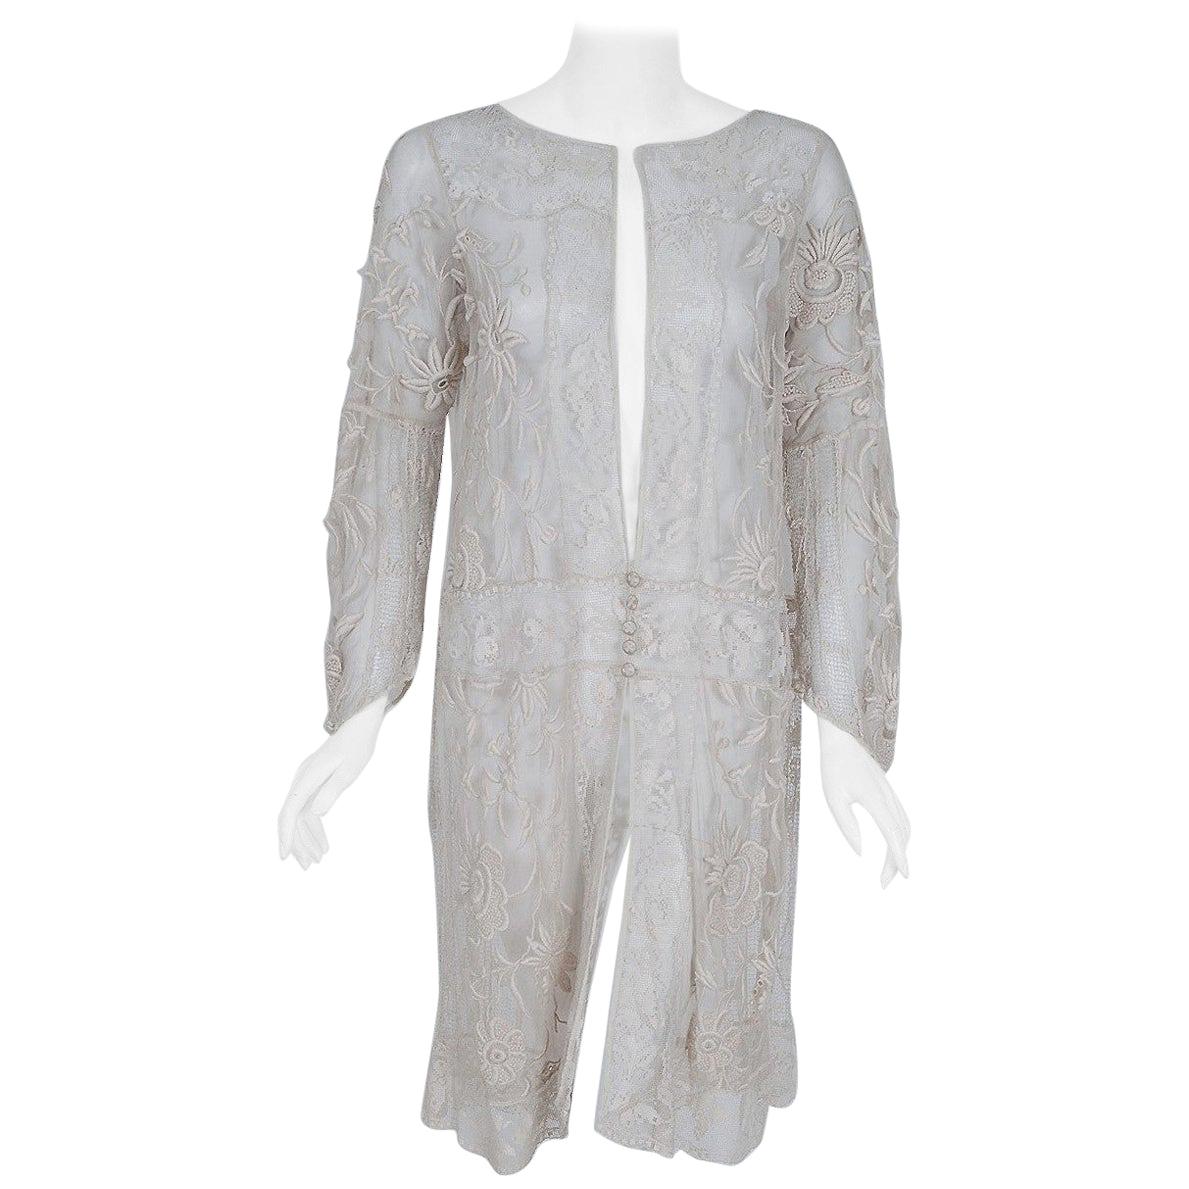 Vintage 1920's Ivory Embroidered Net & Filet-Lace Angel Sleeve Bridal Jacket